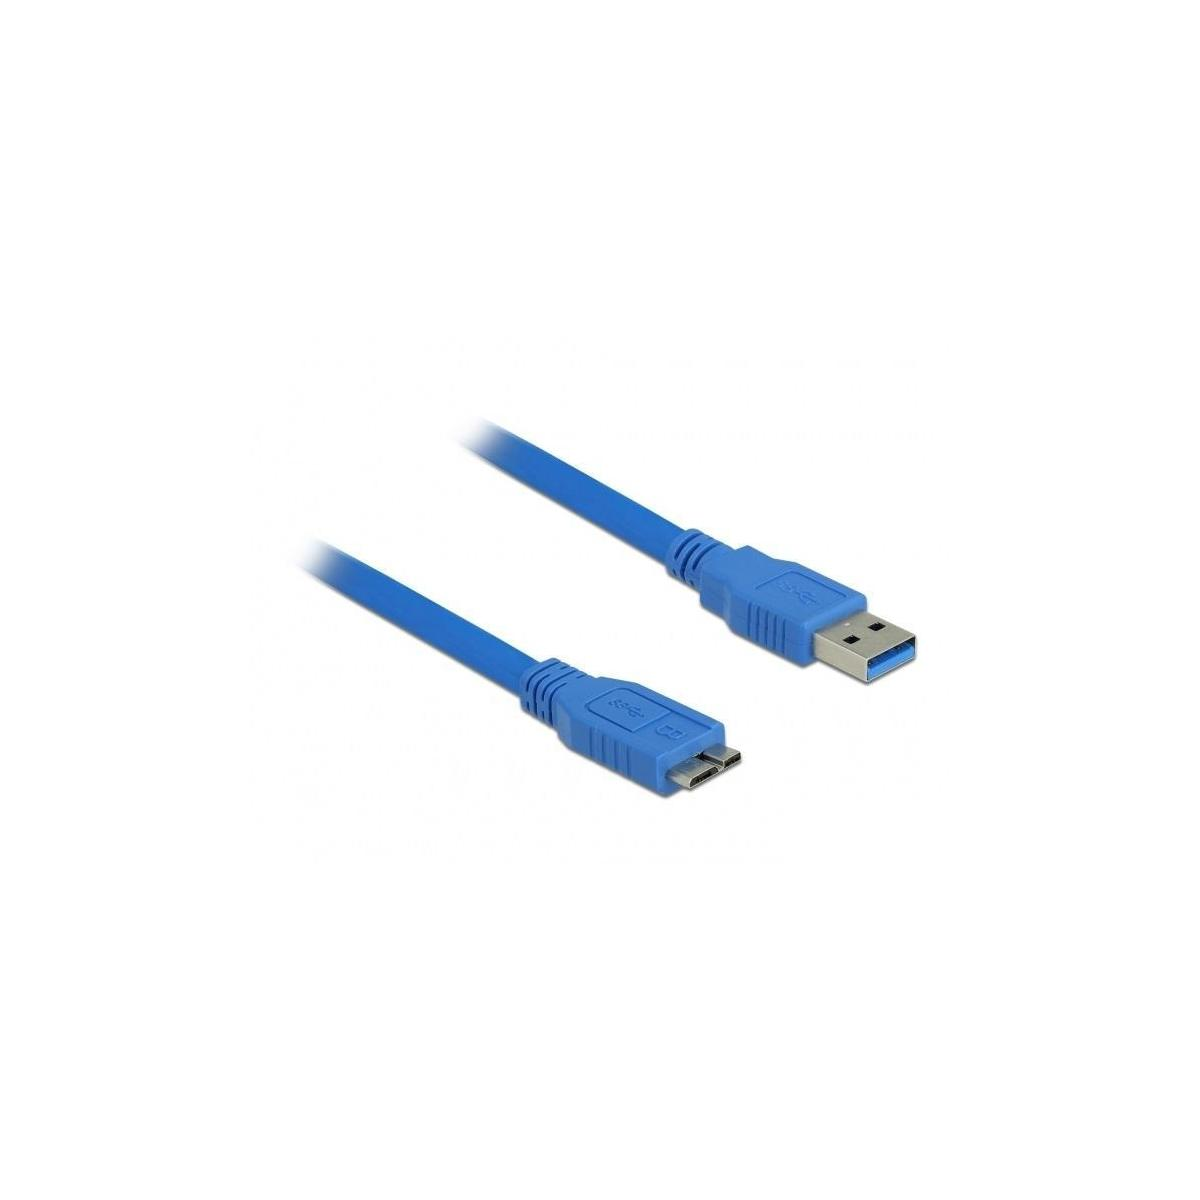 83502 DELOCK USB Kabel, Blau